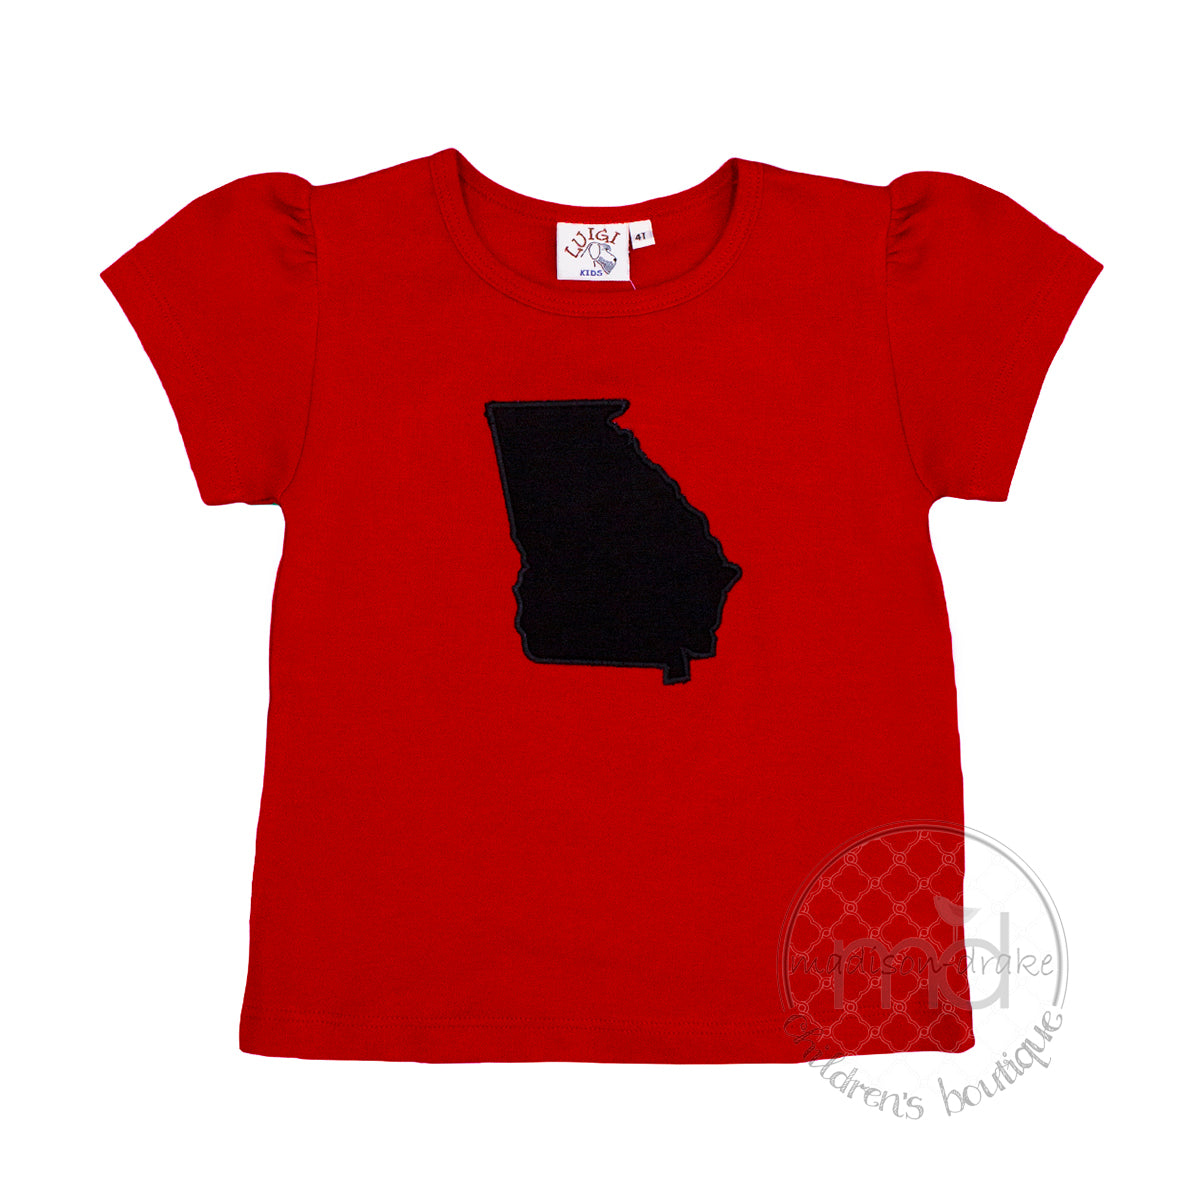 Little Girl's Appliqued State of Georgia Shirt by Luigi Kids